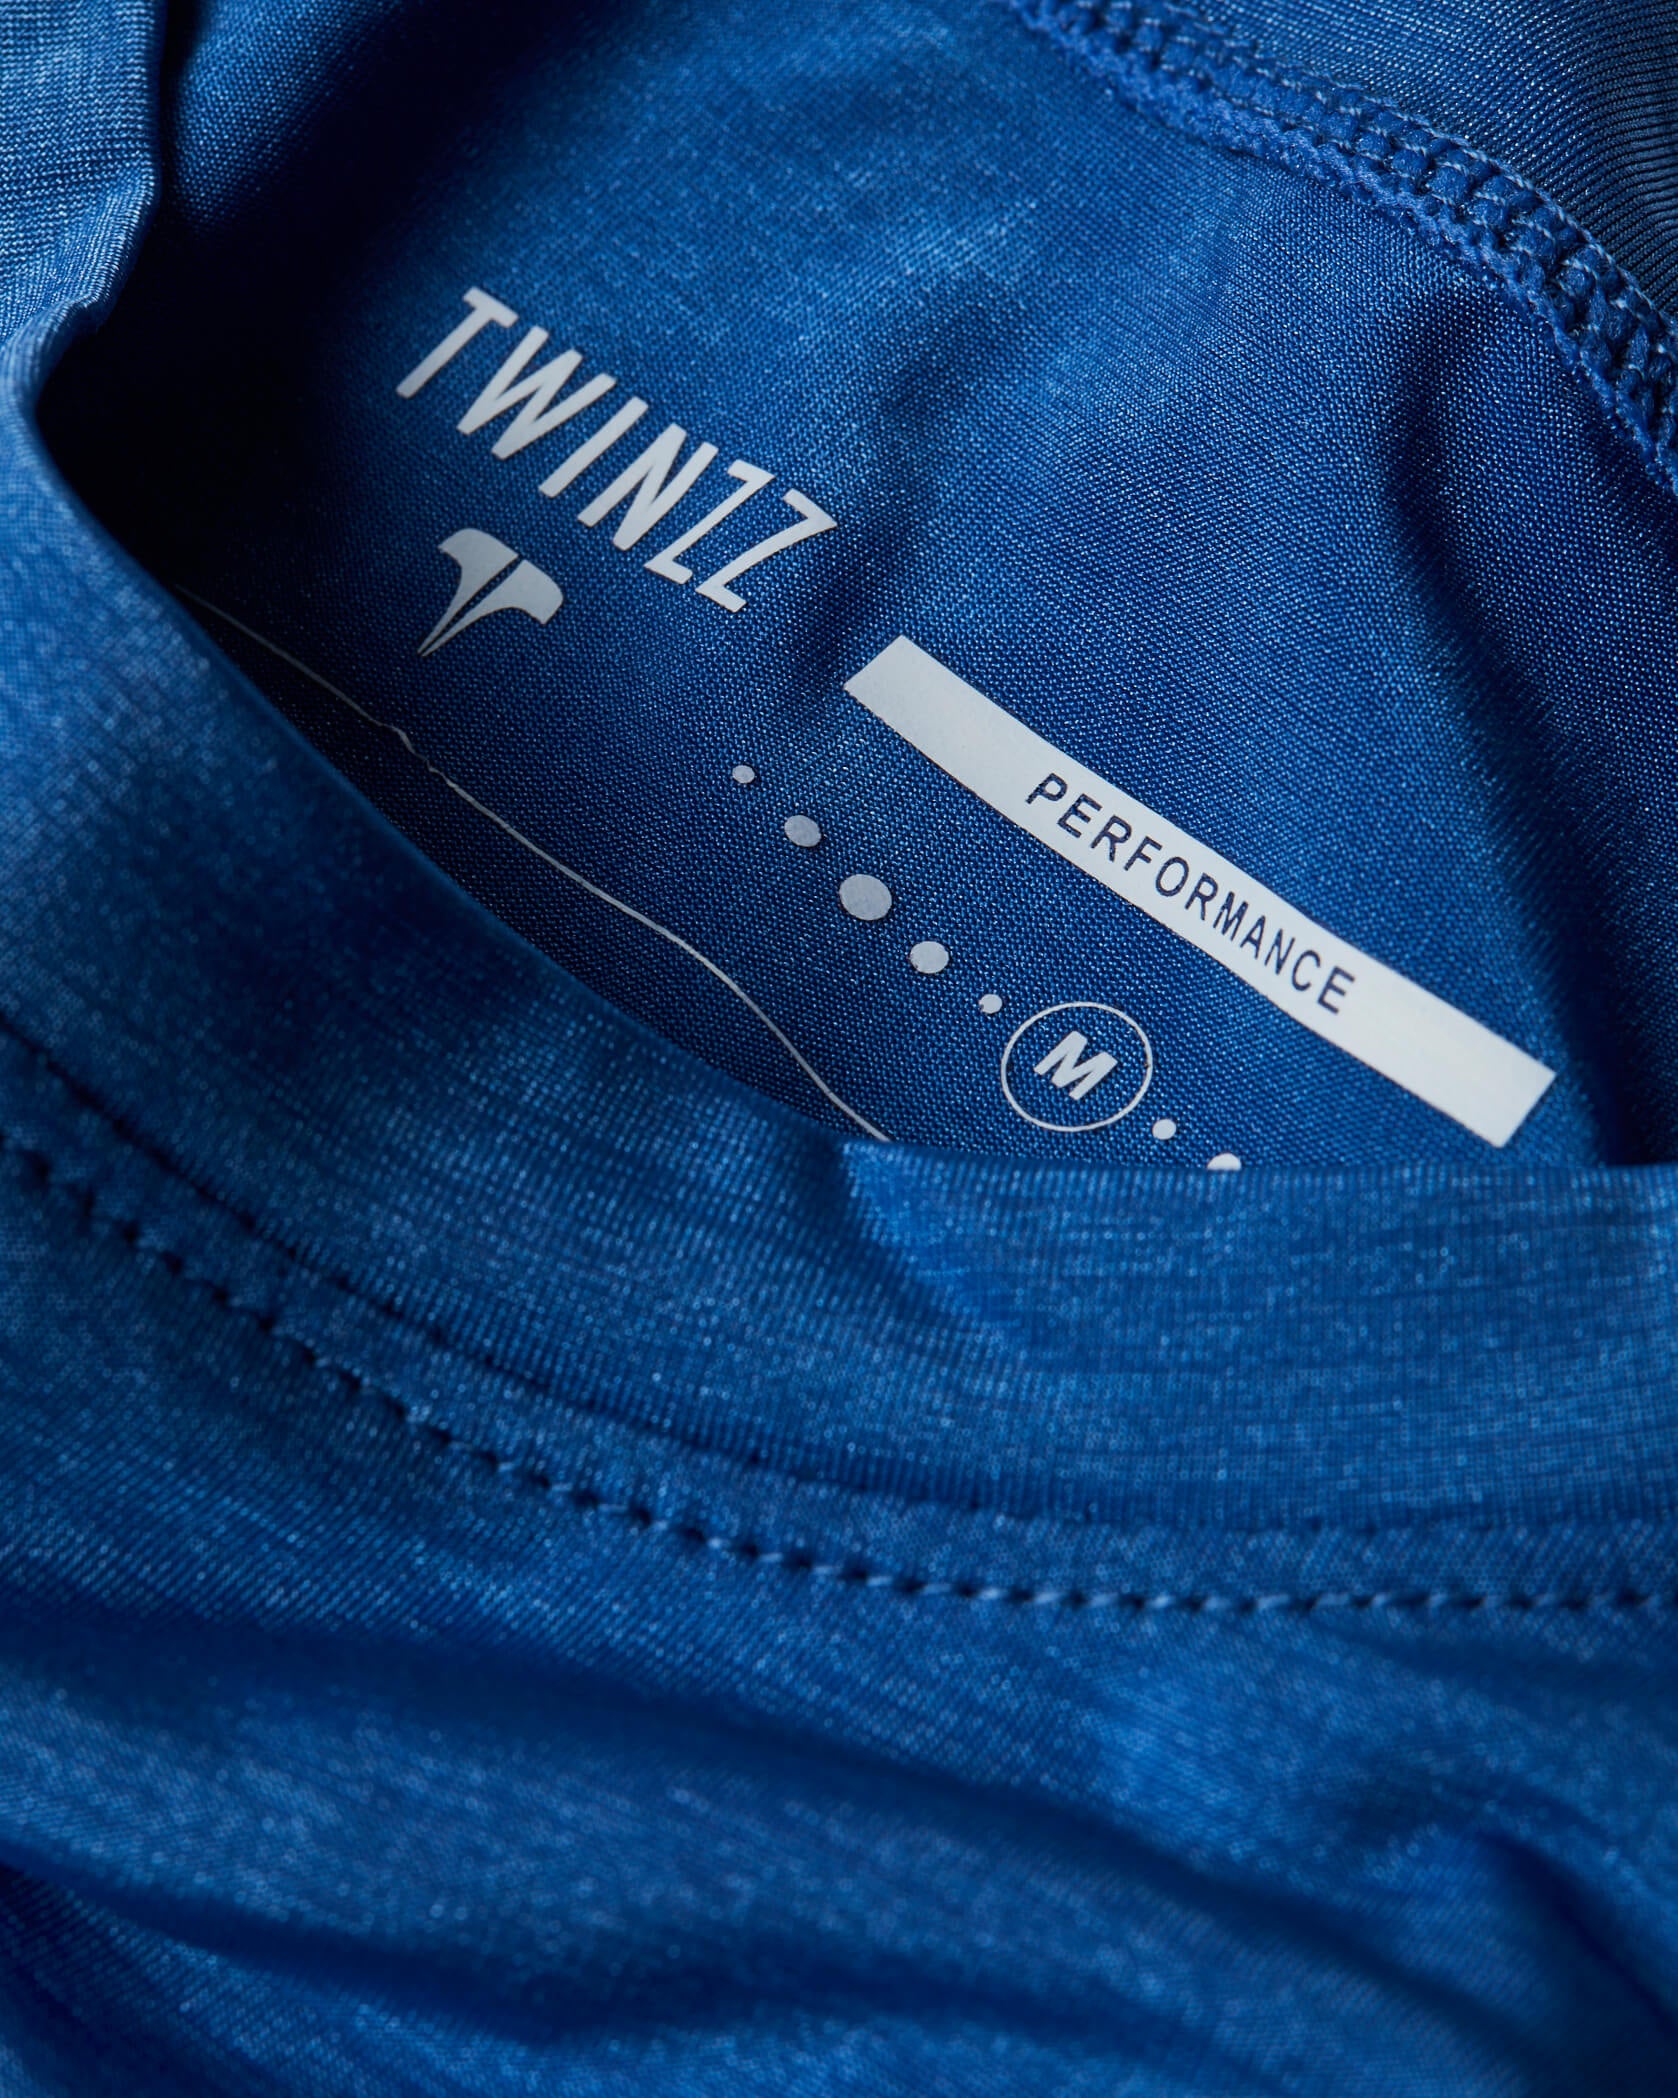 Twinzz active blue t-shirt label